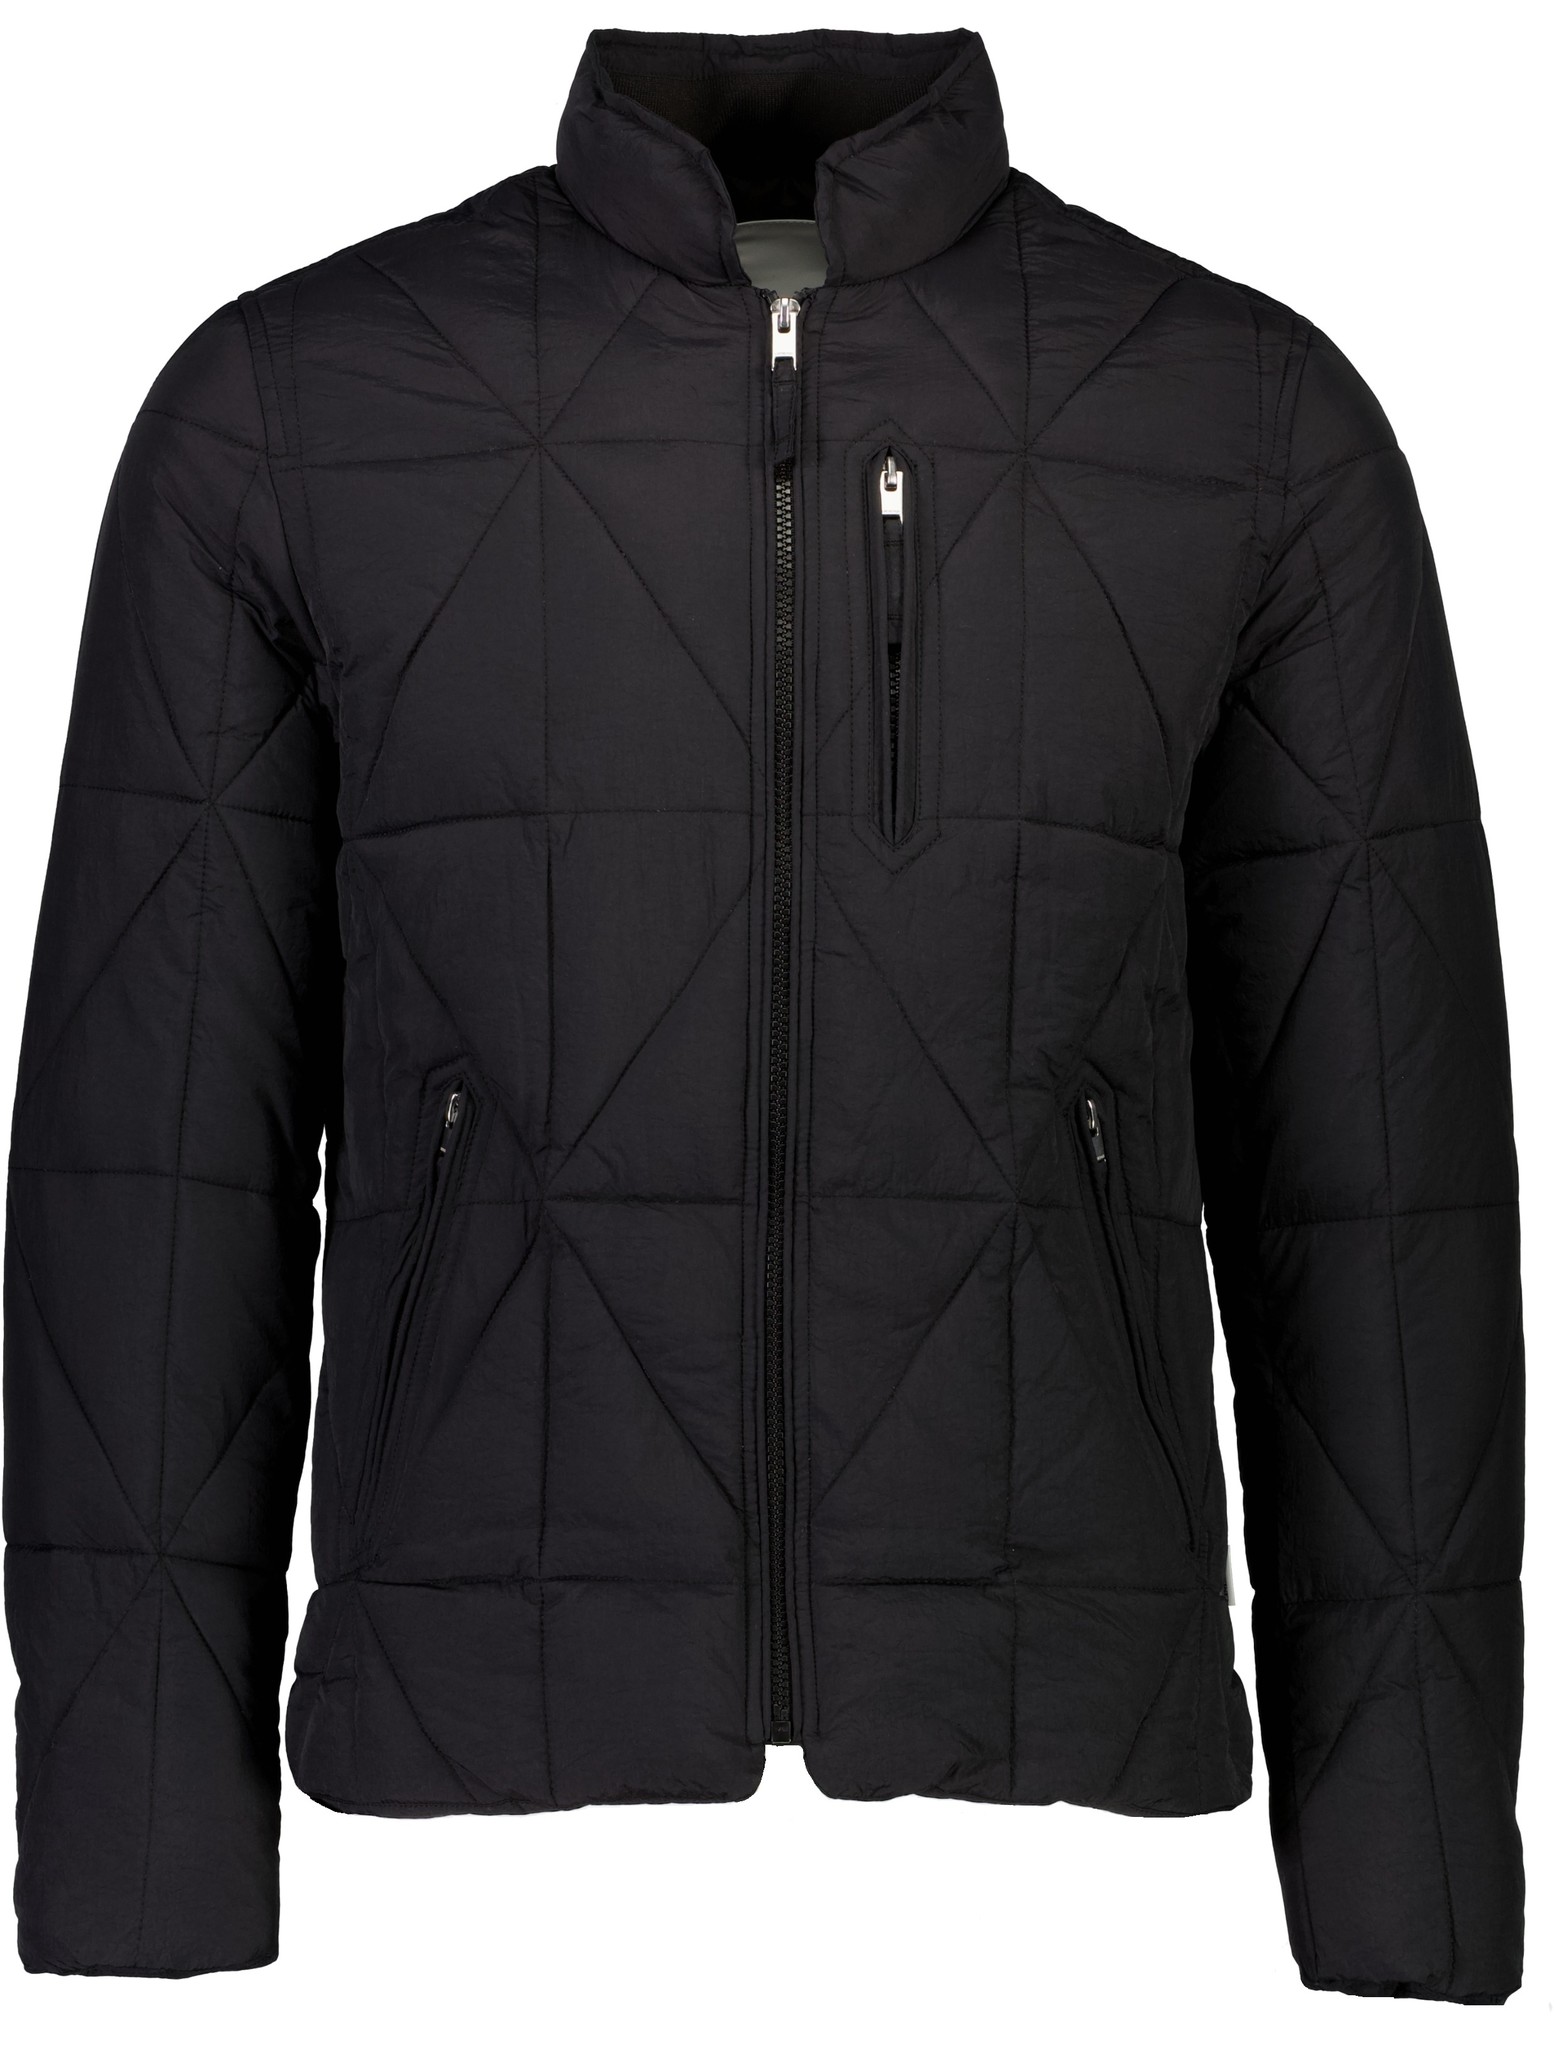 Buy Black Quilted City Jacket Online - Lindbergh - LINDBERGH